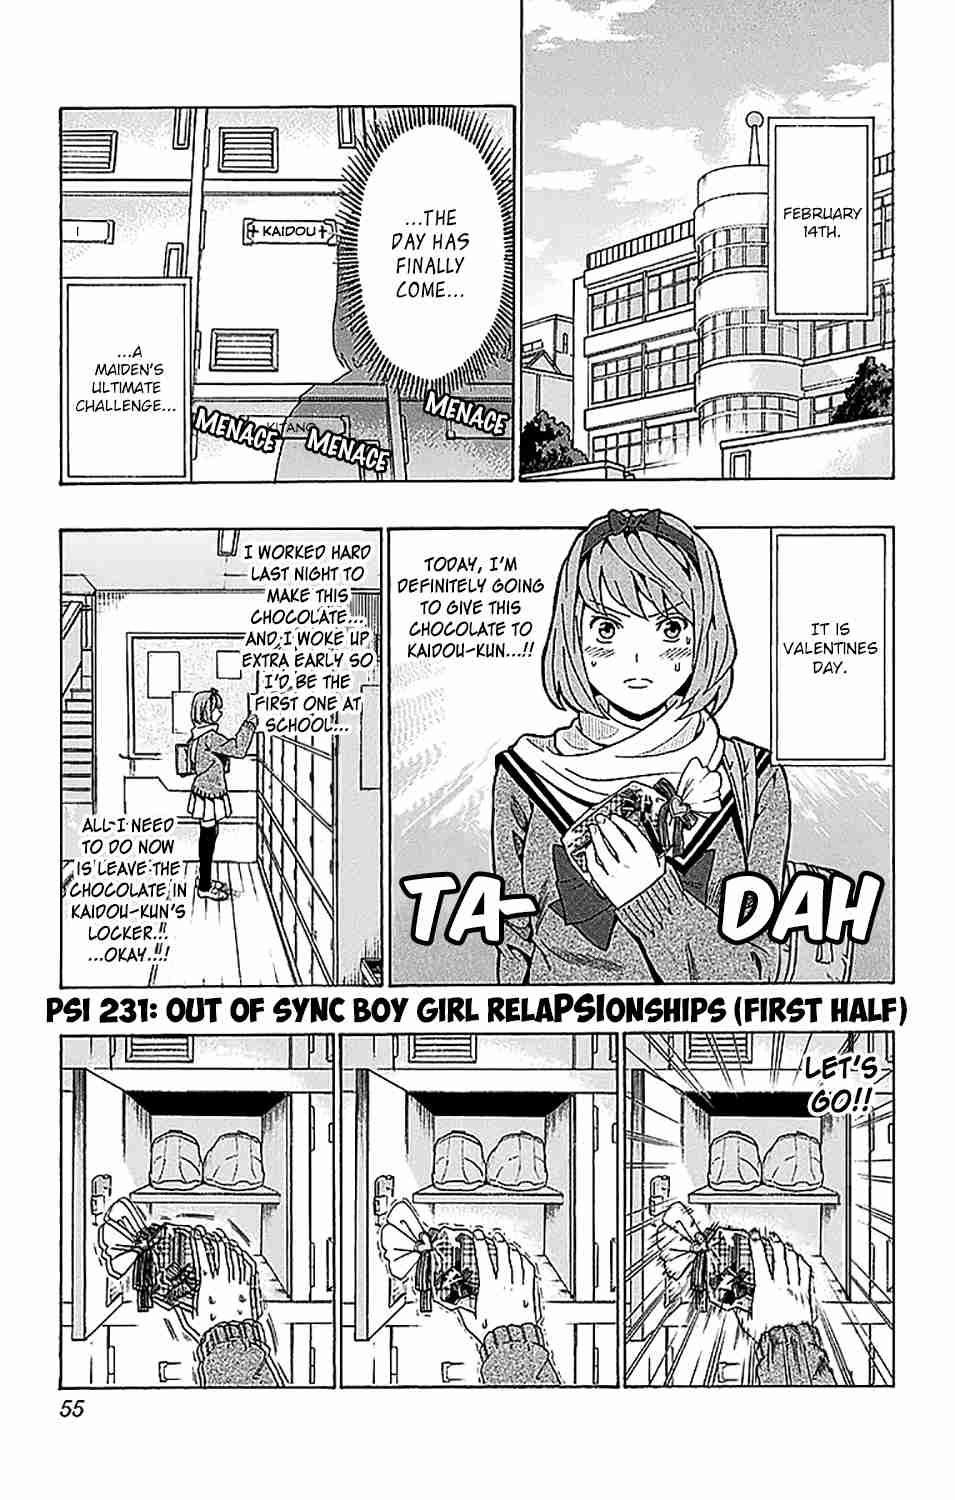 Saiki Kusuo no PSI nan Vol. 22 Ch. 231 Out of Sync Boy Girl RelaPSIonships (First Half)